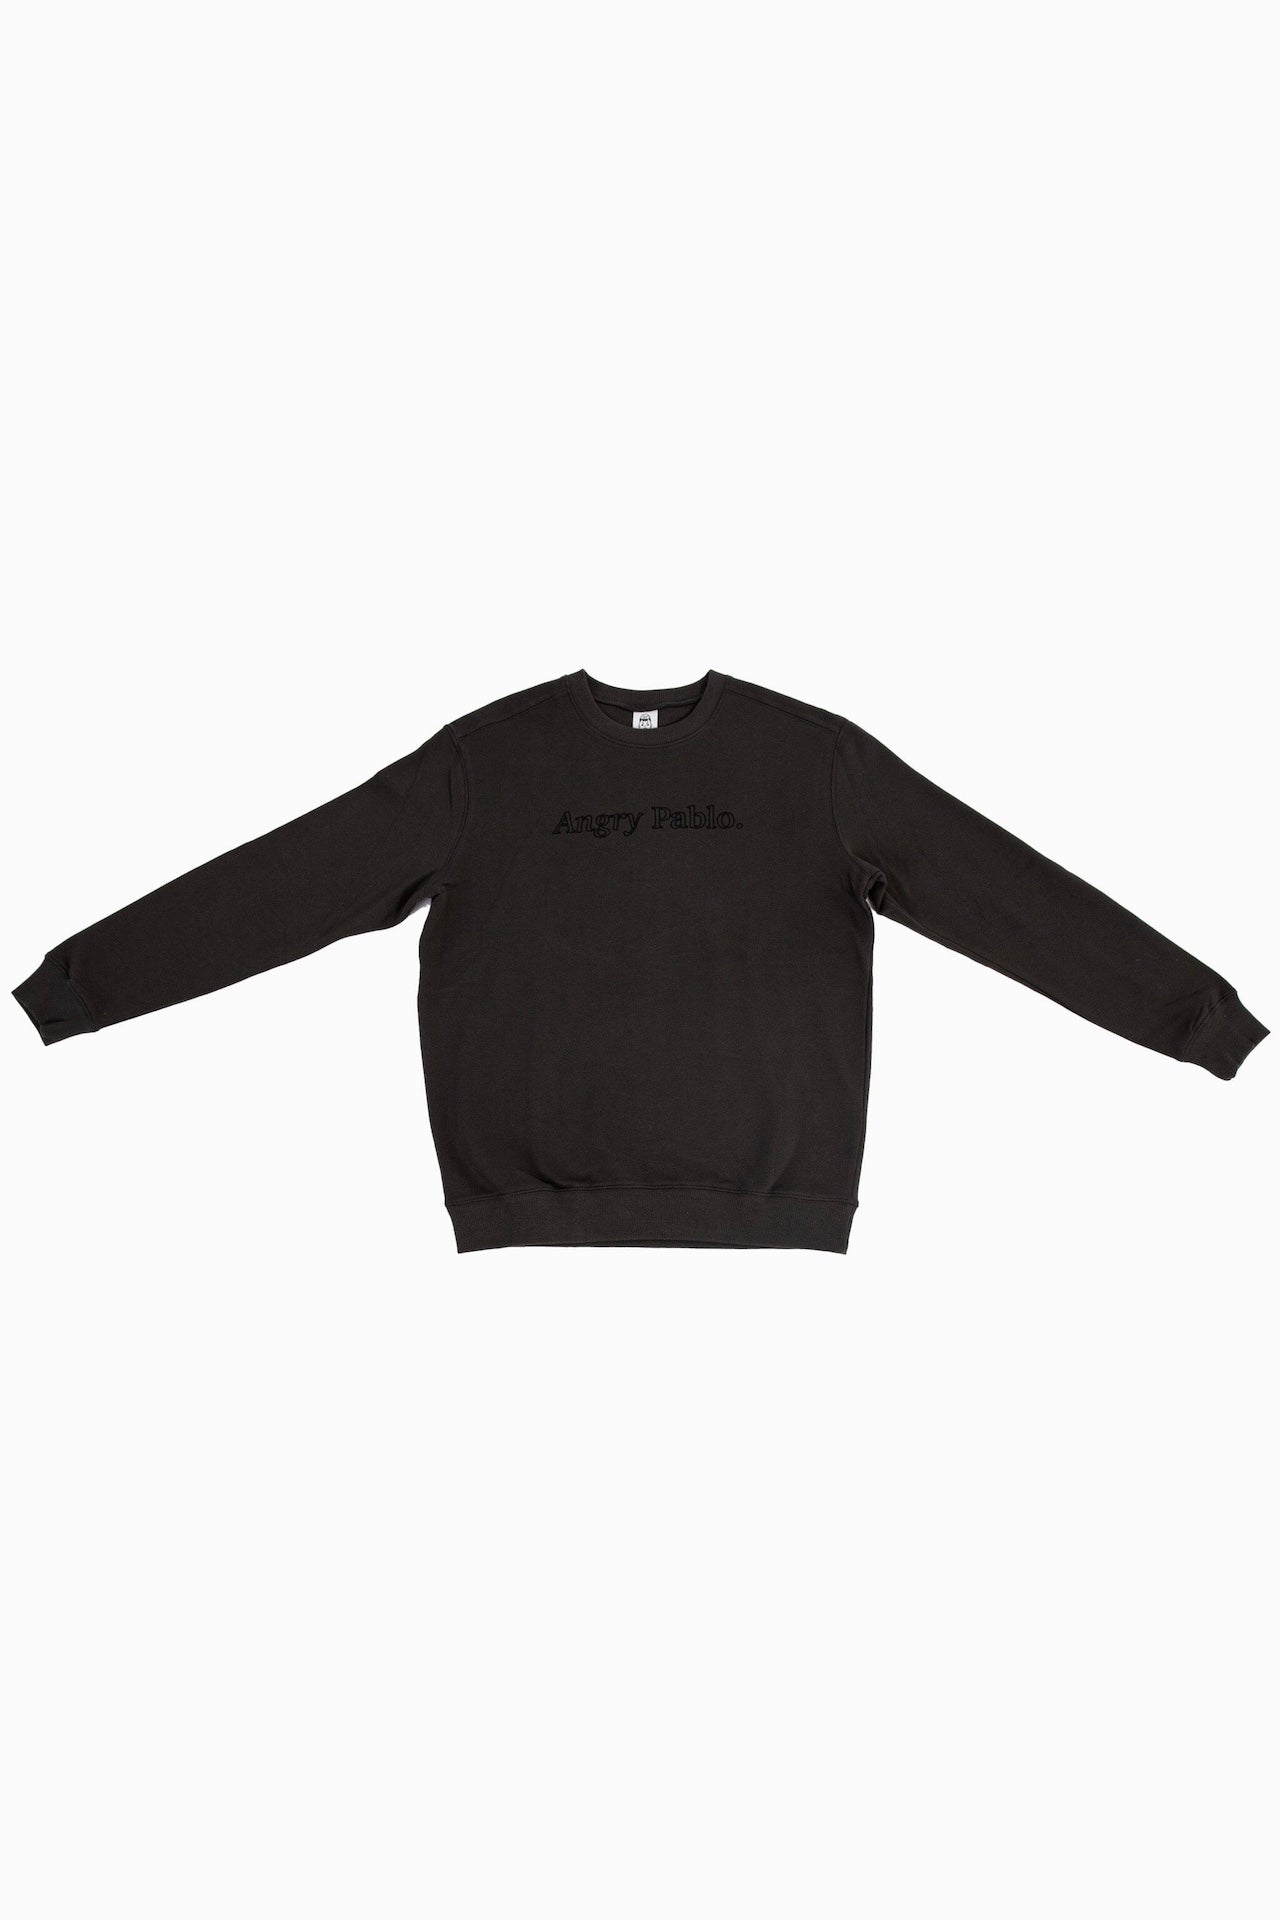 Classic Heavy Sweatshirt - Charcoal Black / Black